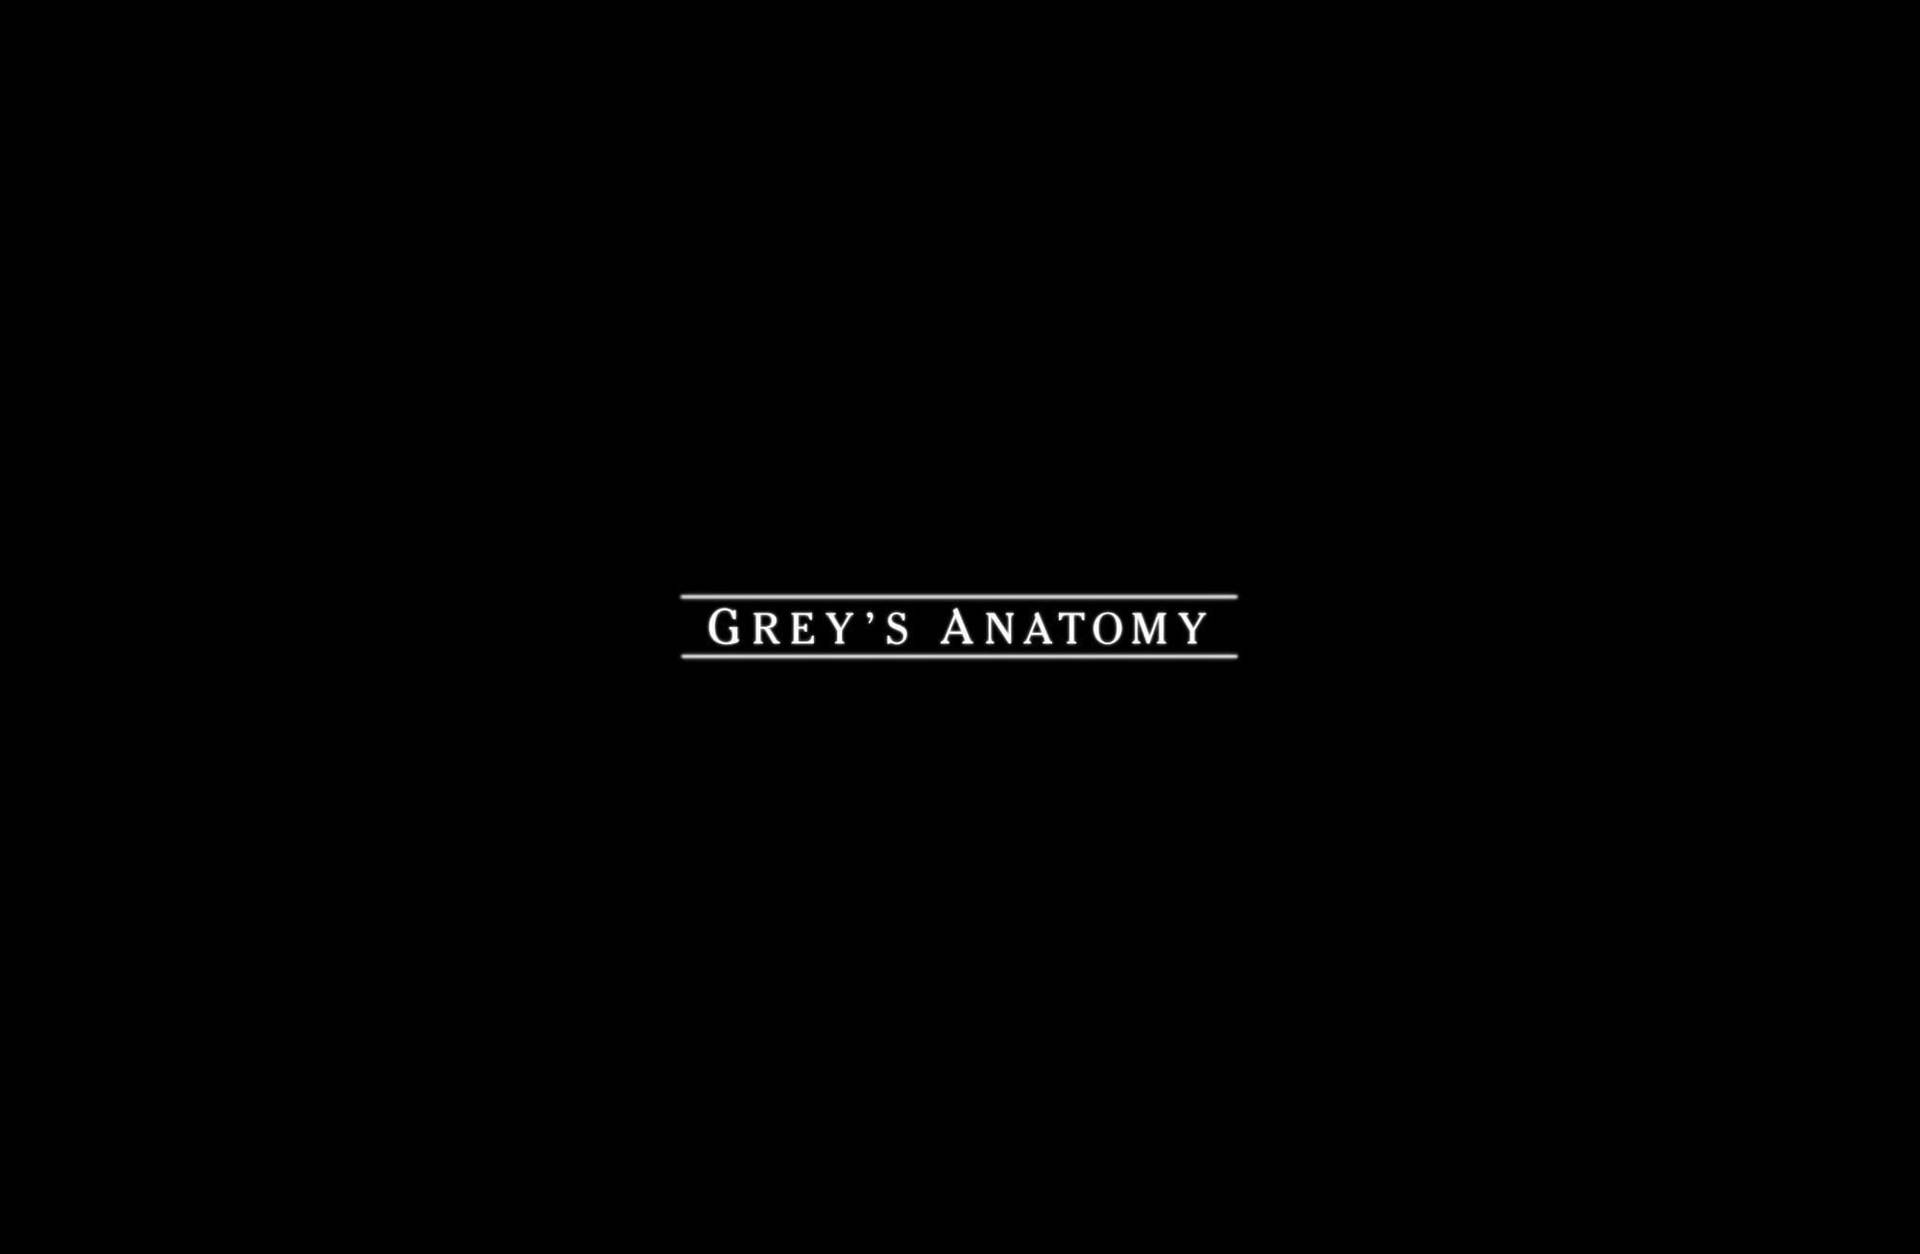 Grey's Anatomy Opening Title Wallpaper